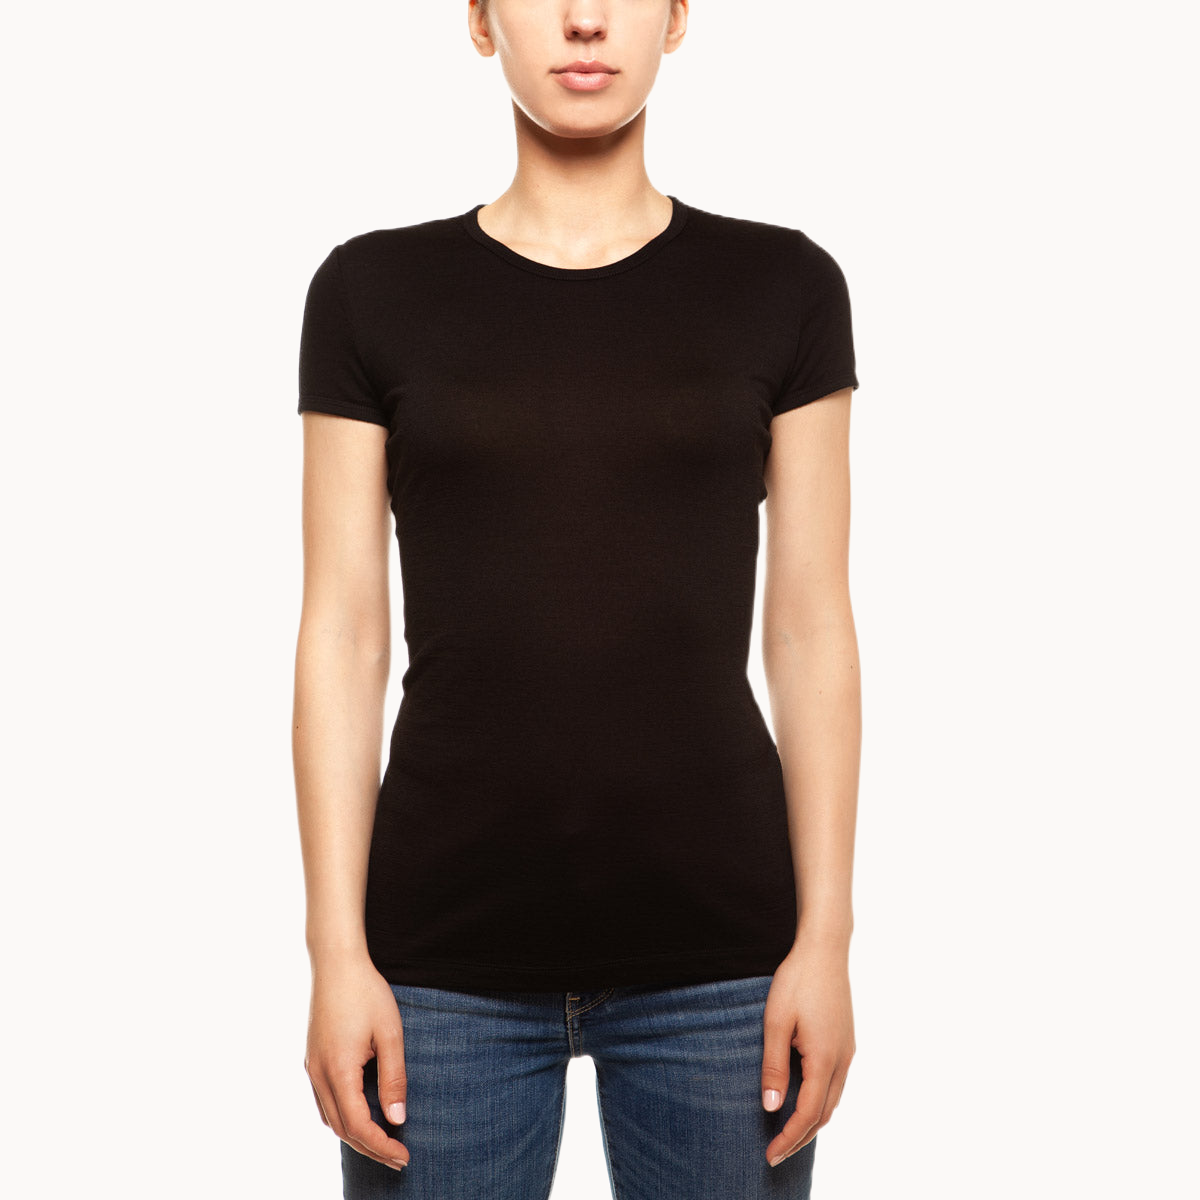 MENIQUE 100% Merino Wool Womens Shirt Black